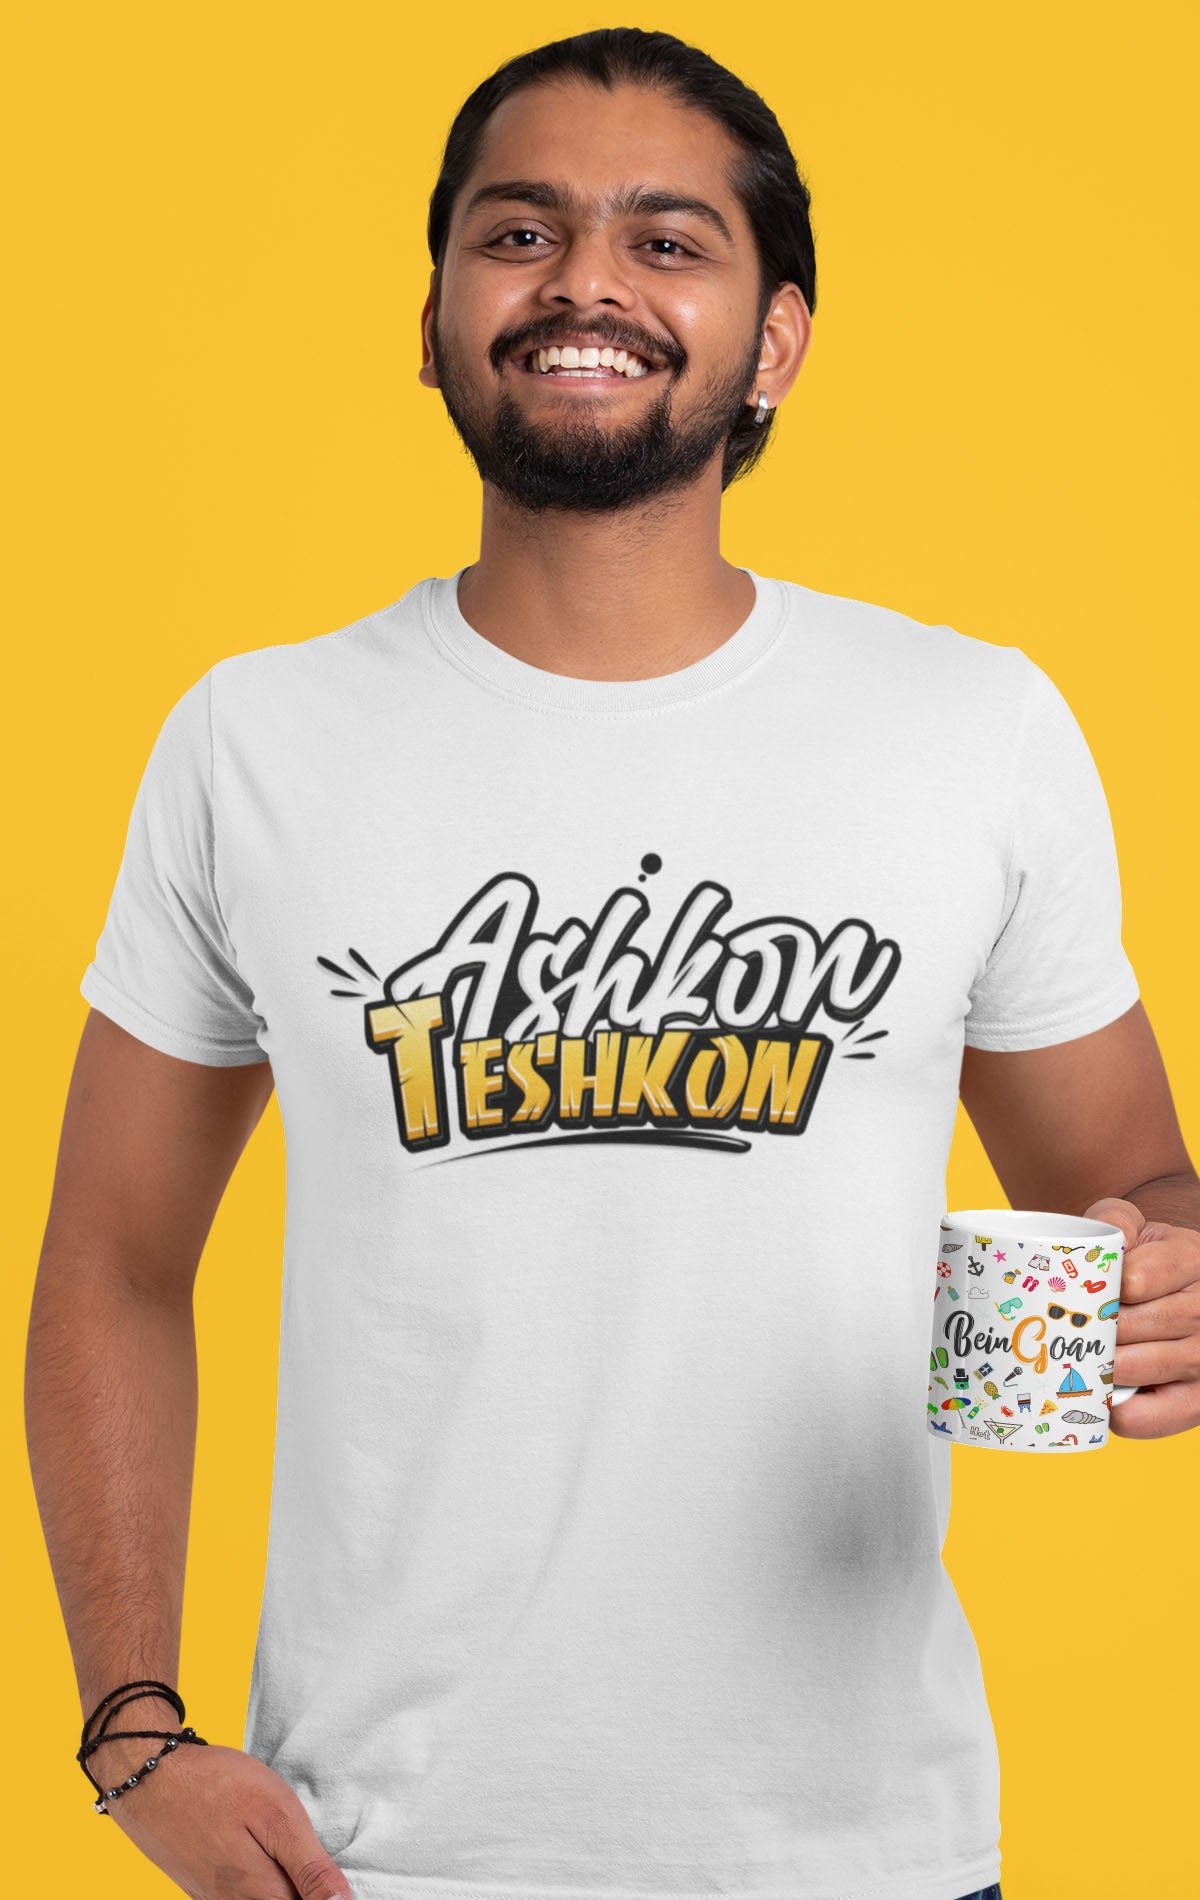 Ashkon Teshkon is a Goan phrase which means "This Way That Way" we Goans love these phrases and in the Konkani Language